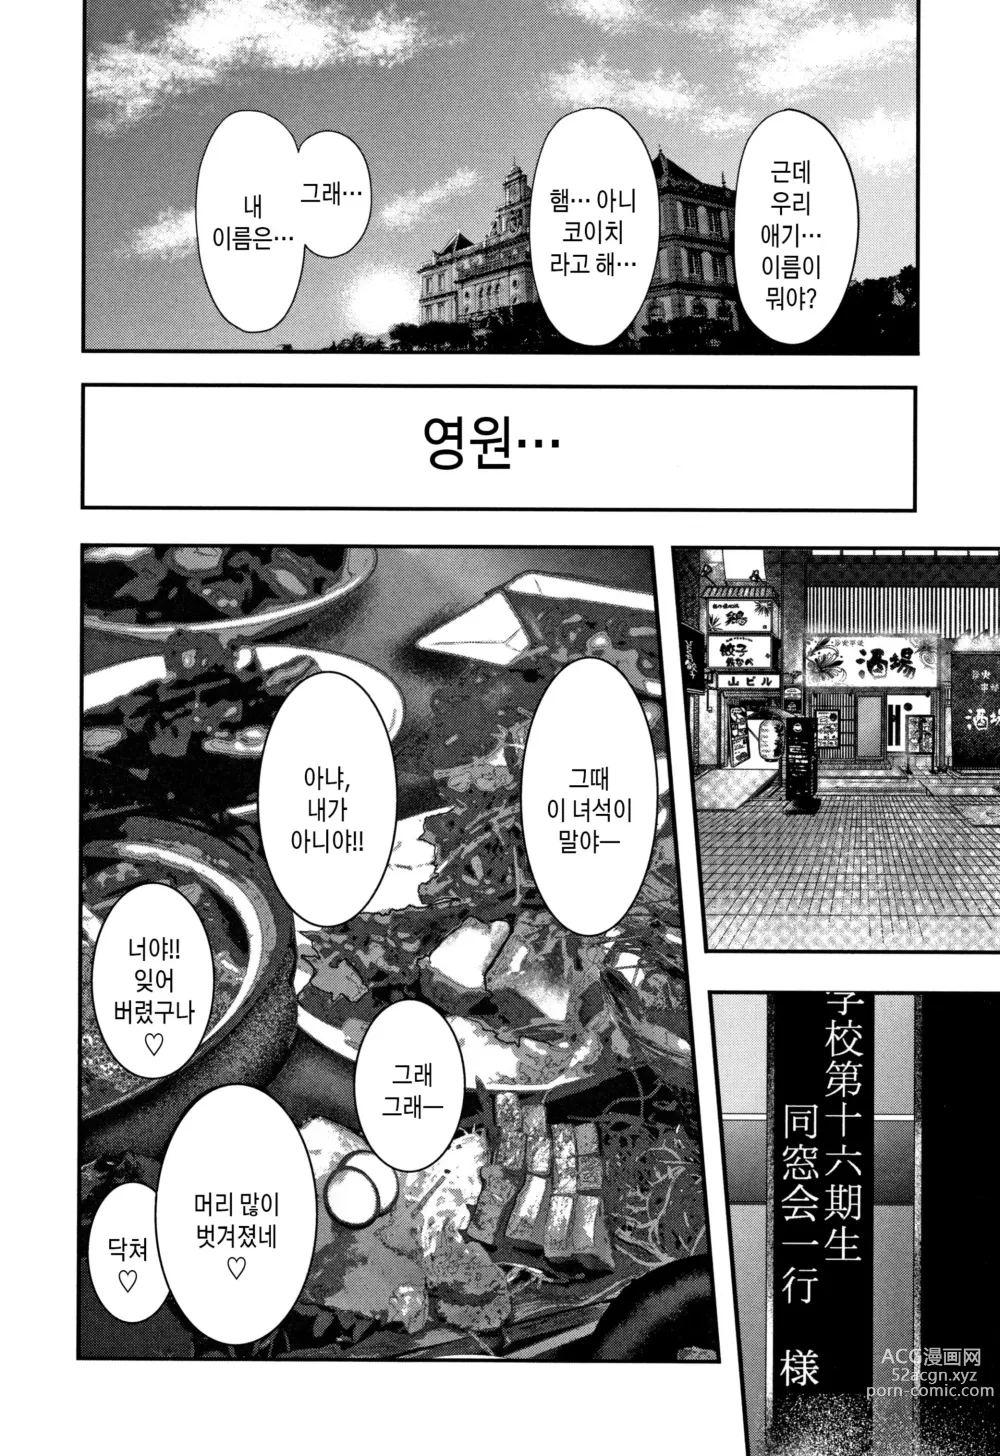 Page 218 of manga 나와 선생님과 친구엄마